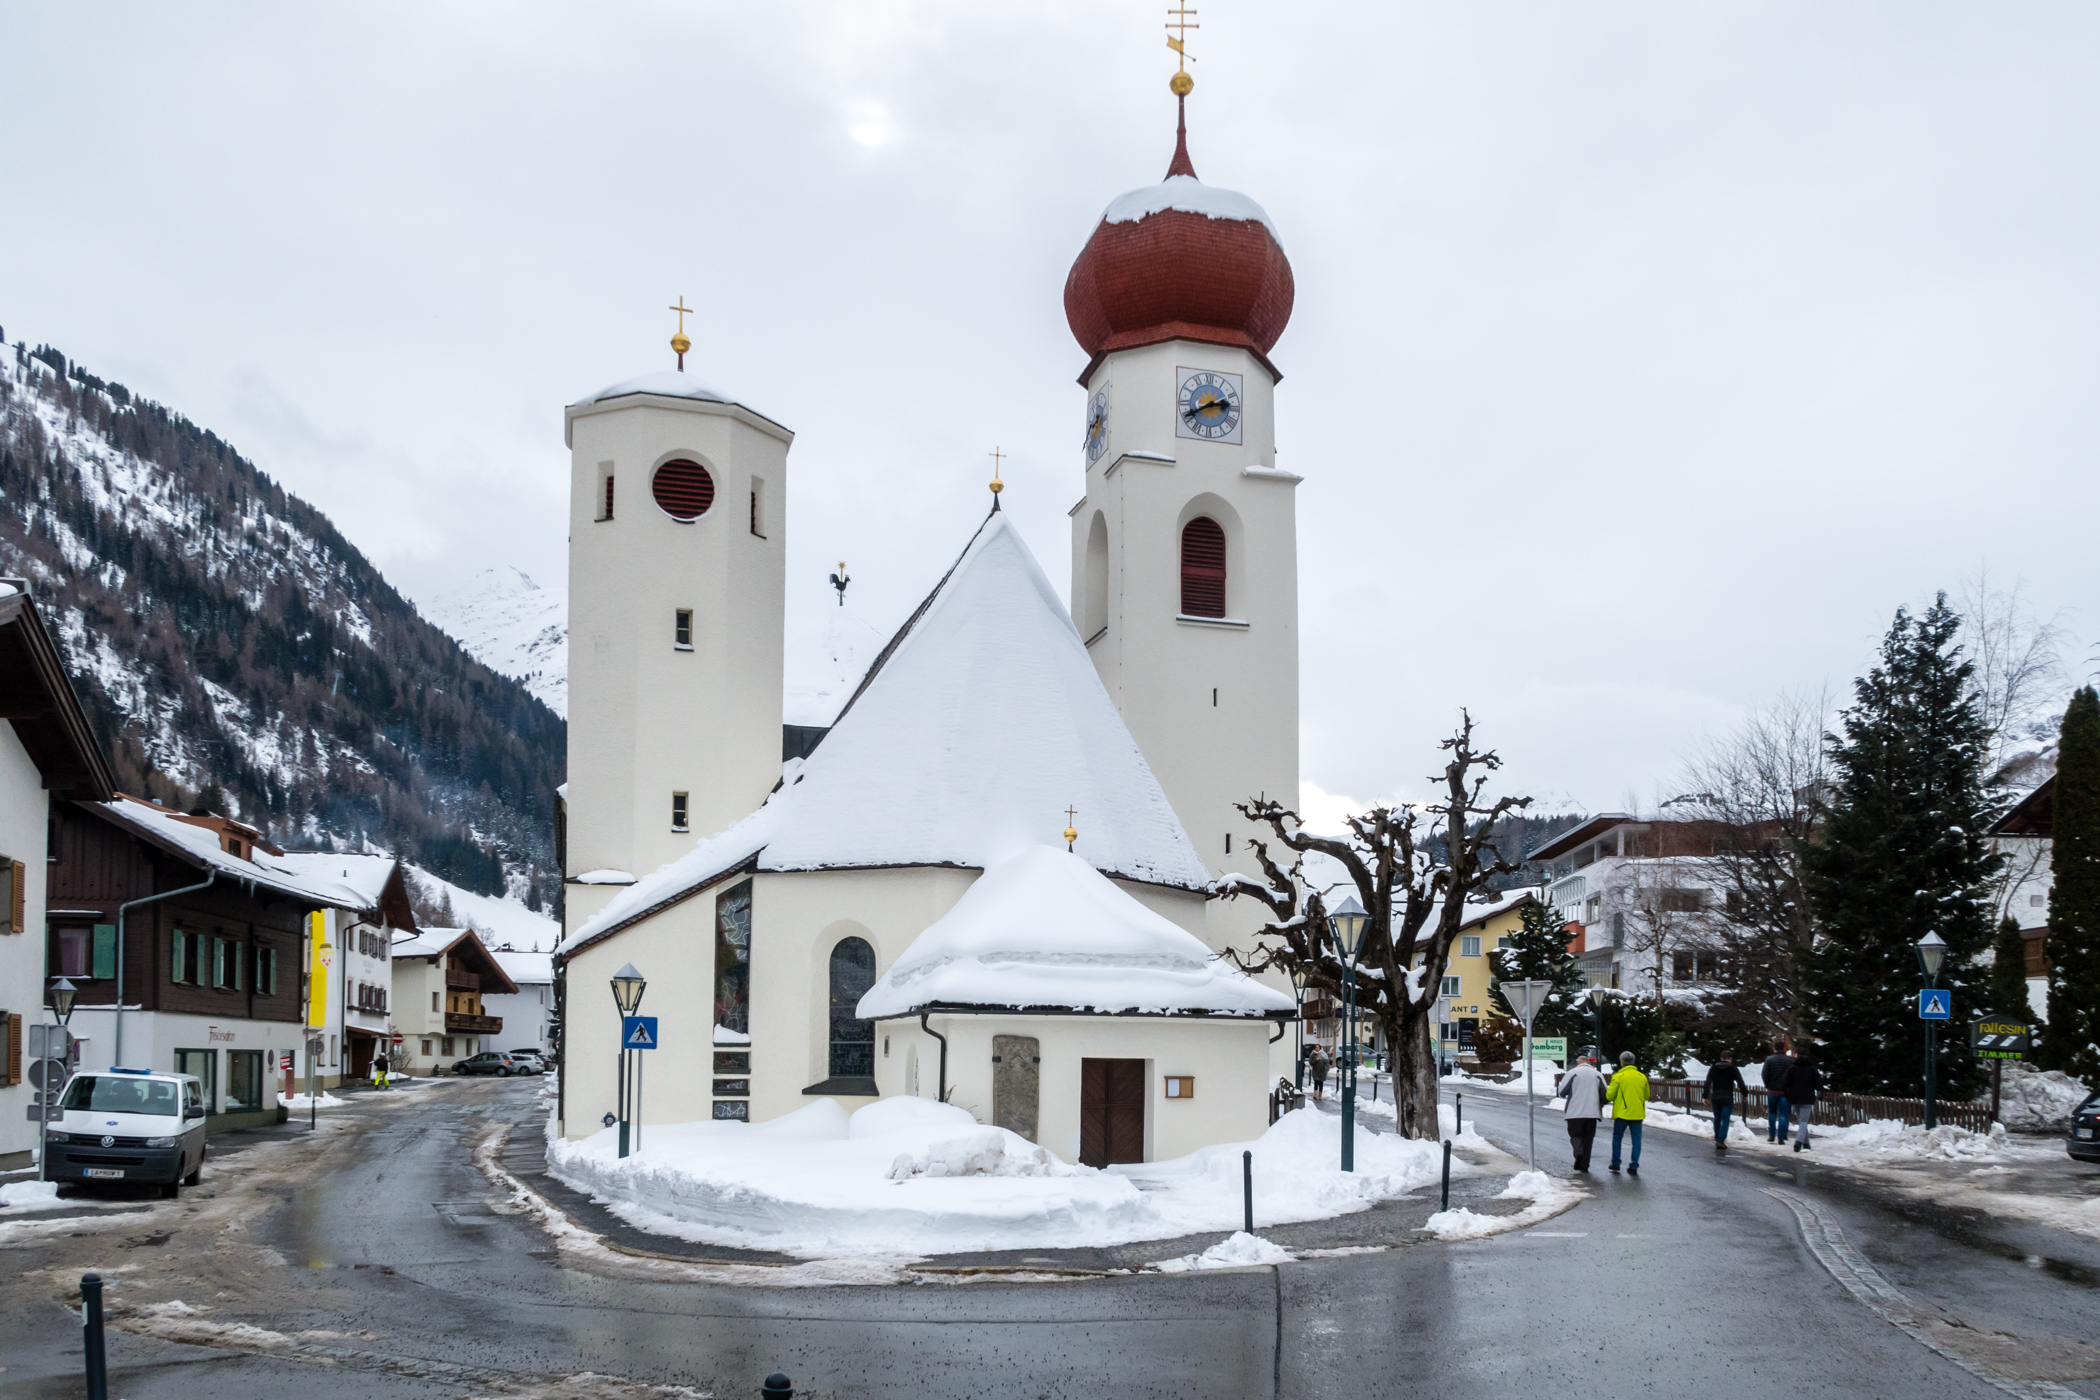 Pfarrkirche St. Anton am Arlberg nær centrum af St. Anton by // Foto: Troels Kjems